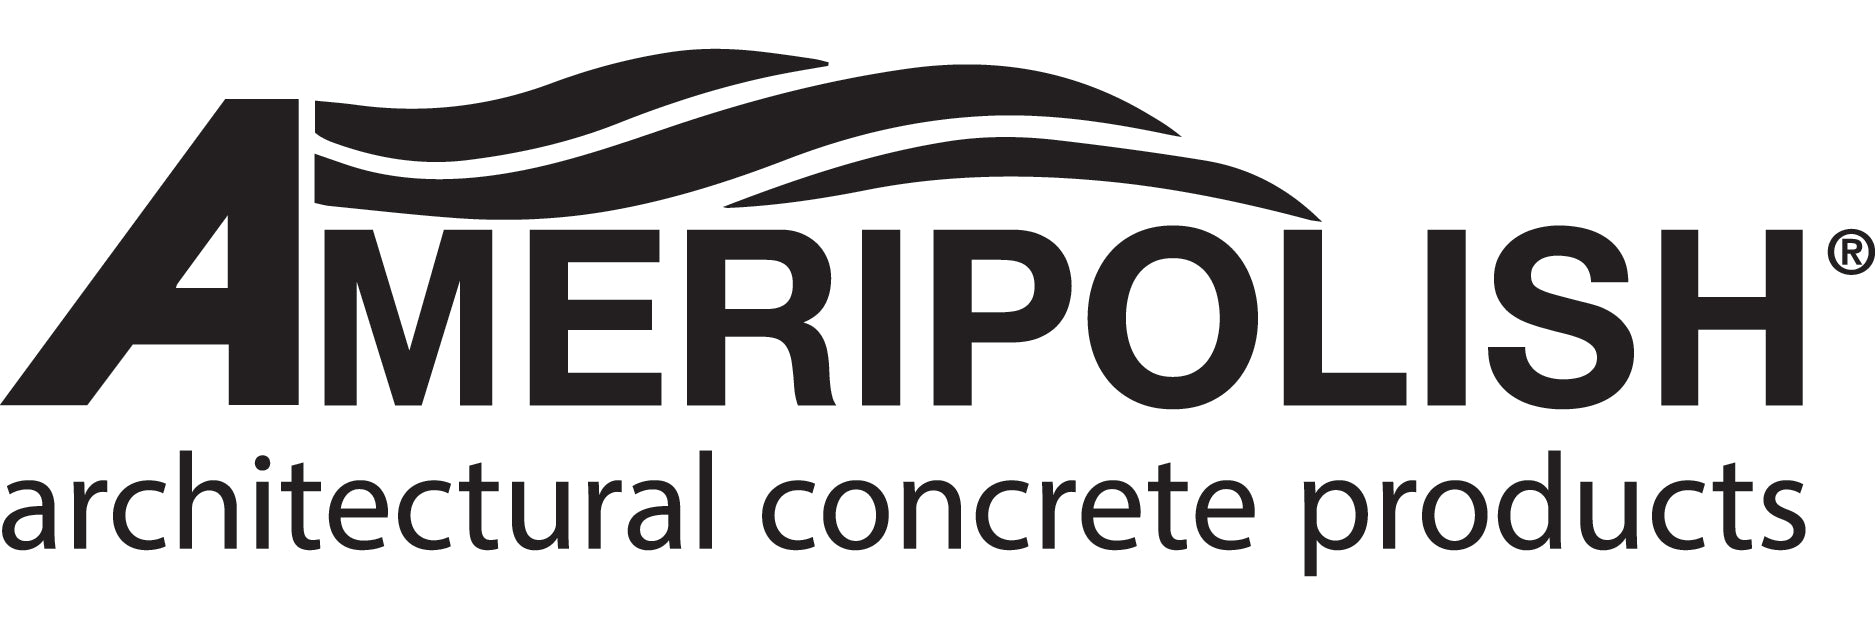 Ameripolish architectural concrete products logo